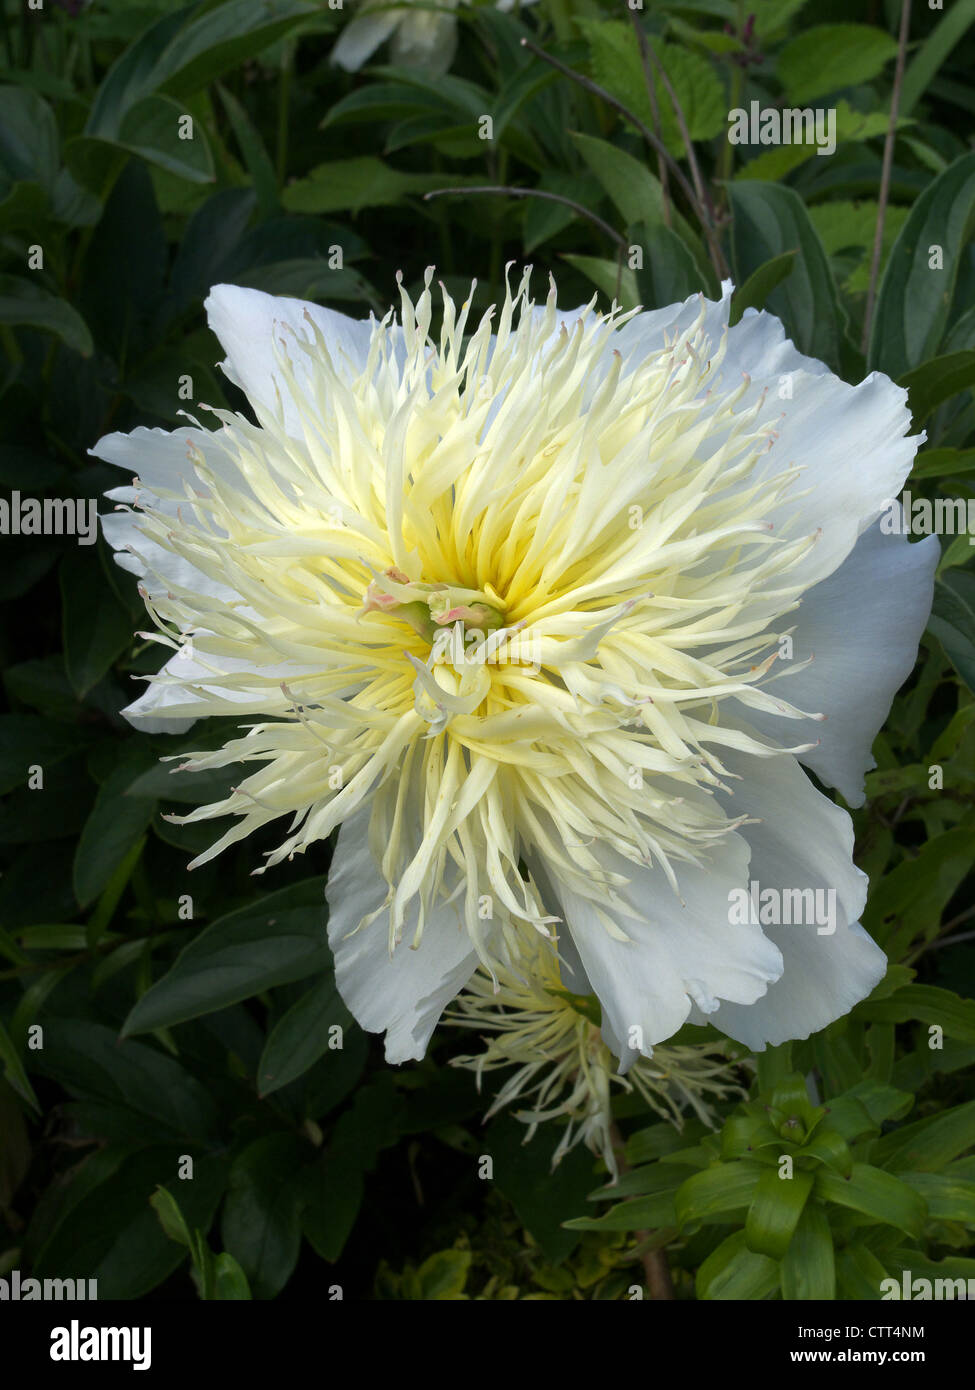 A White Flowering Paeony Stock Photo